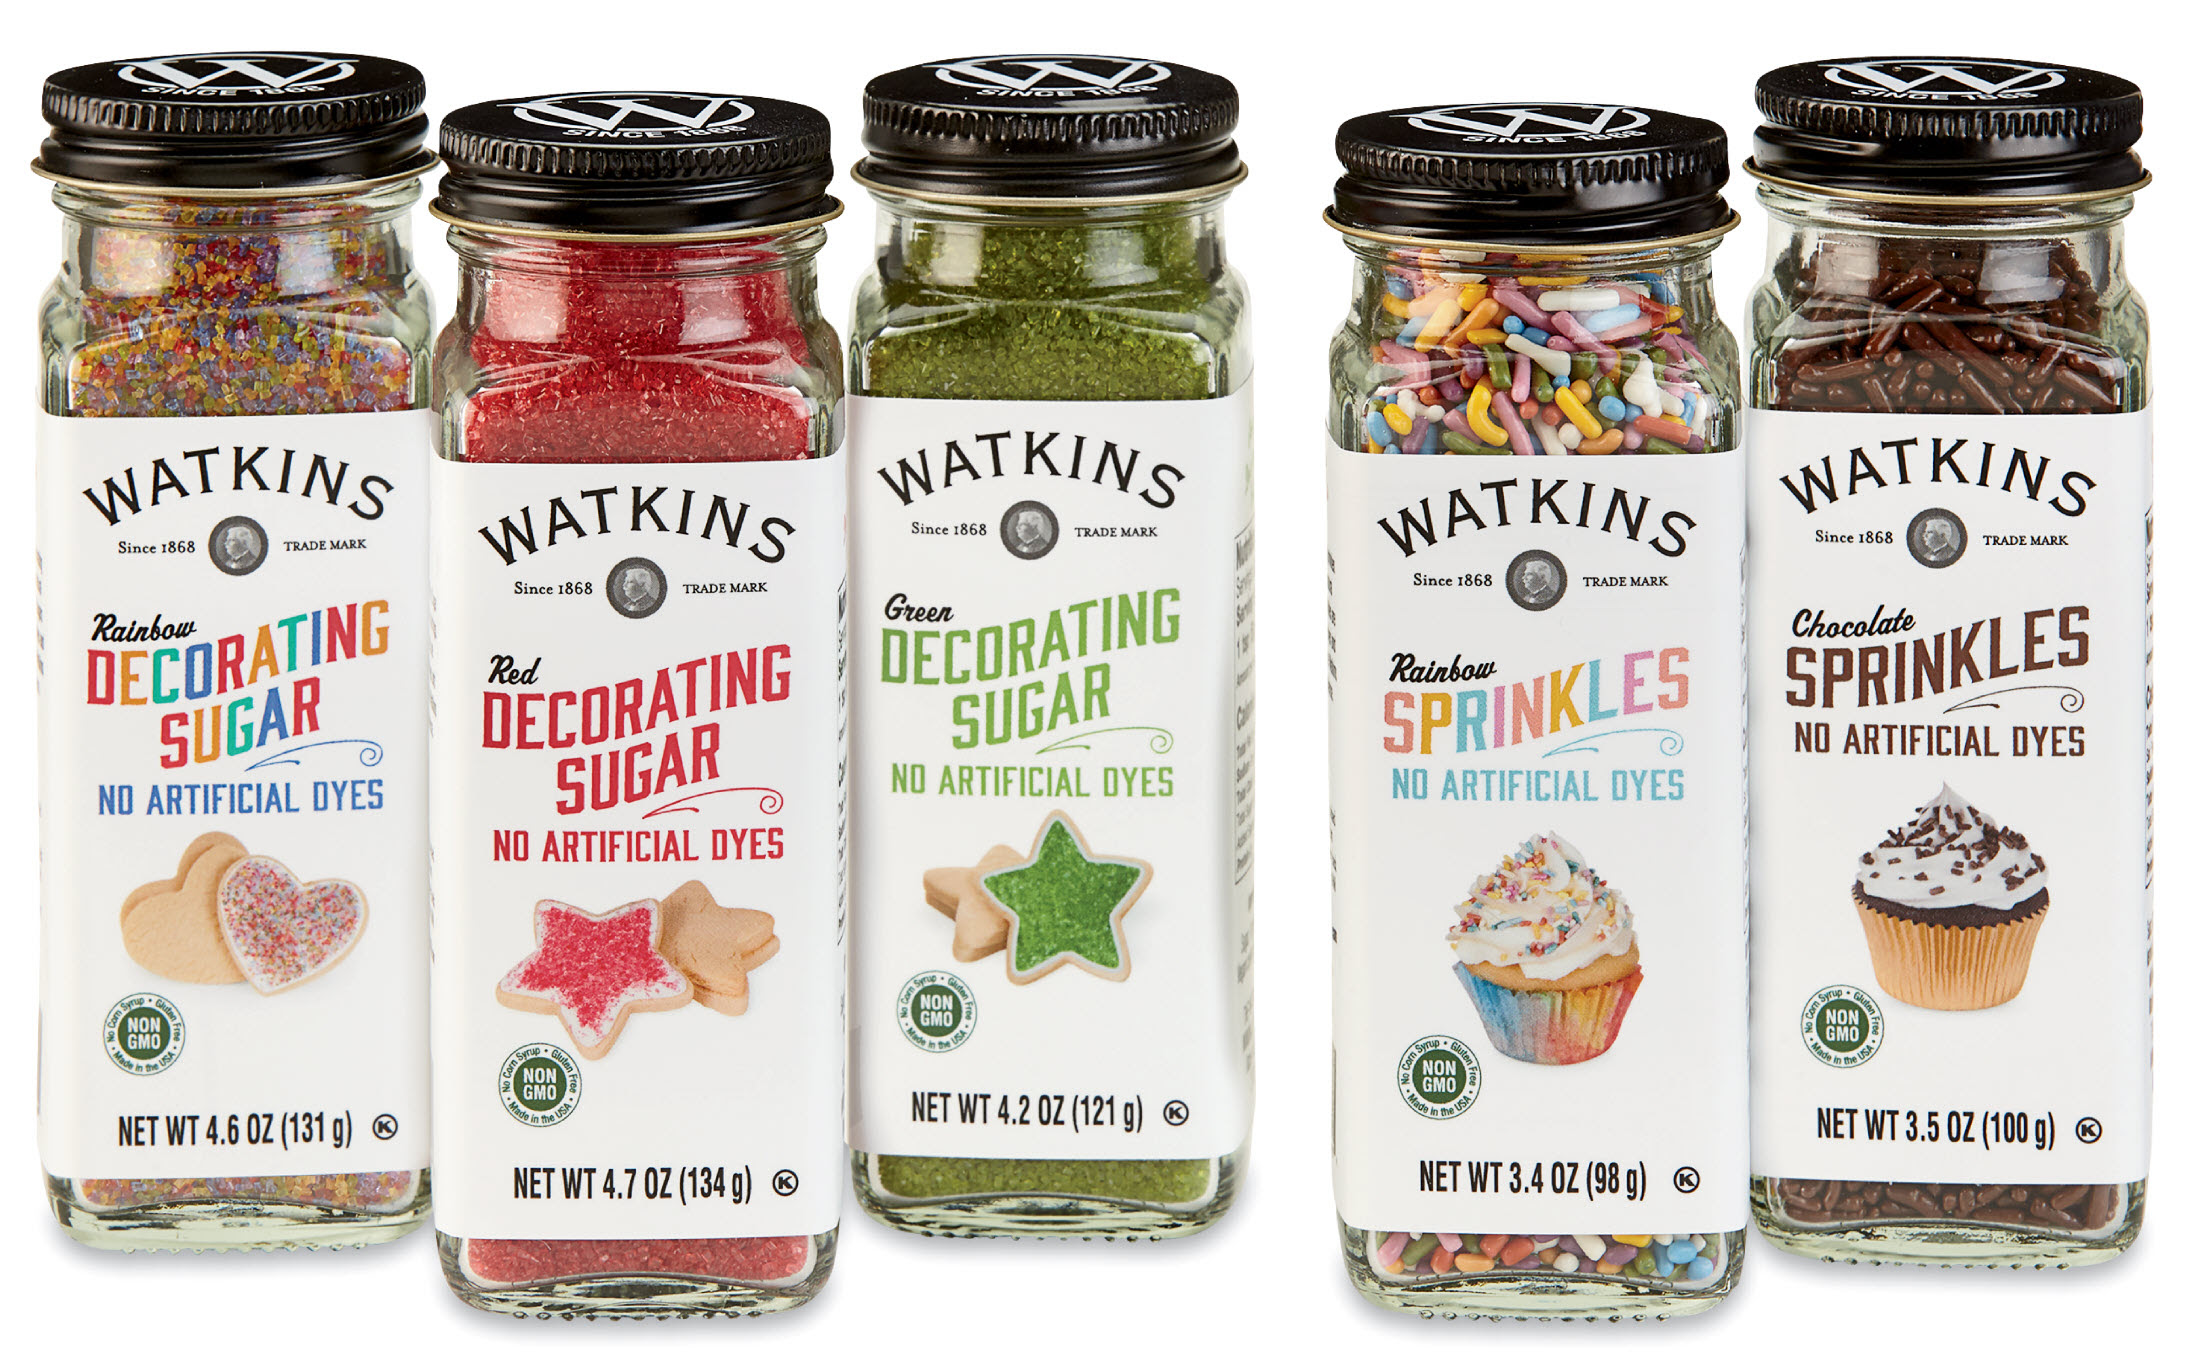 Watkins New Products - celebrating 150 years - jr watkins company and business canada usa